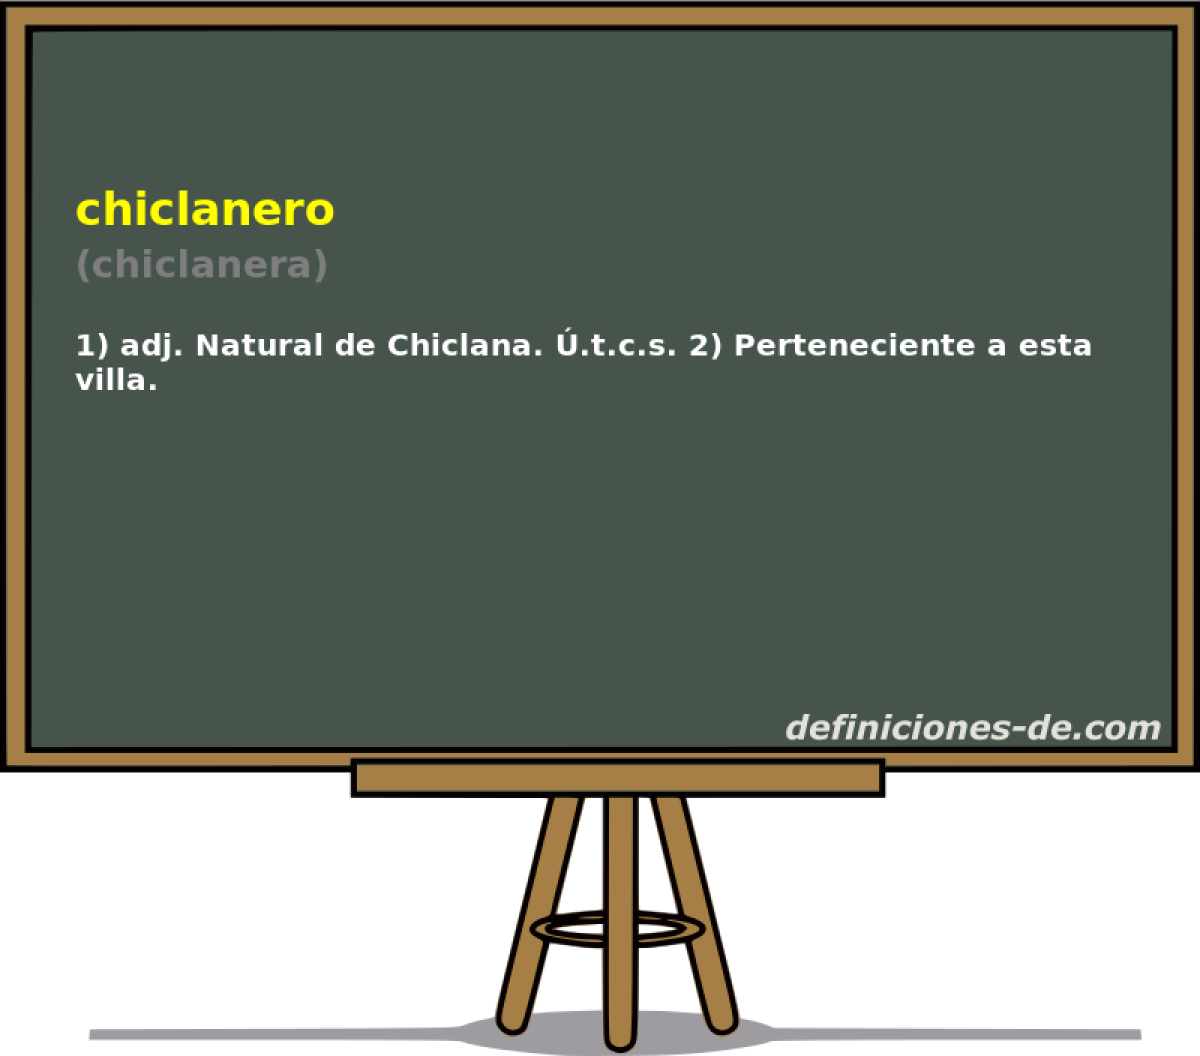 chiclanero (chiclanera)